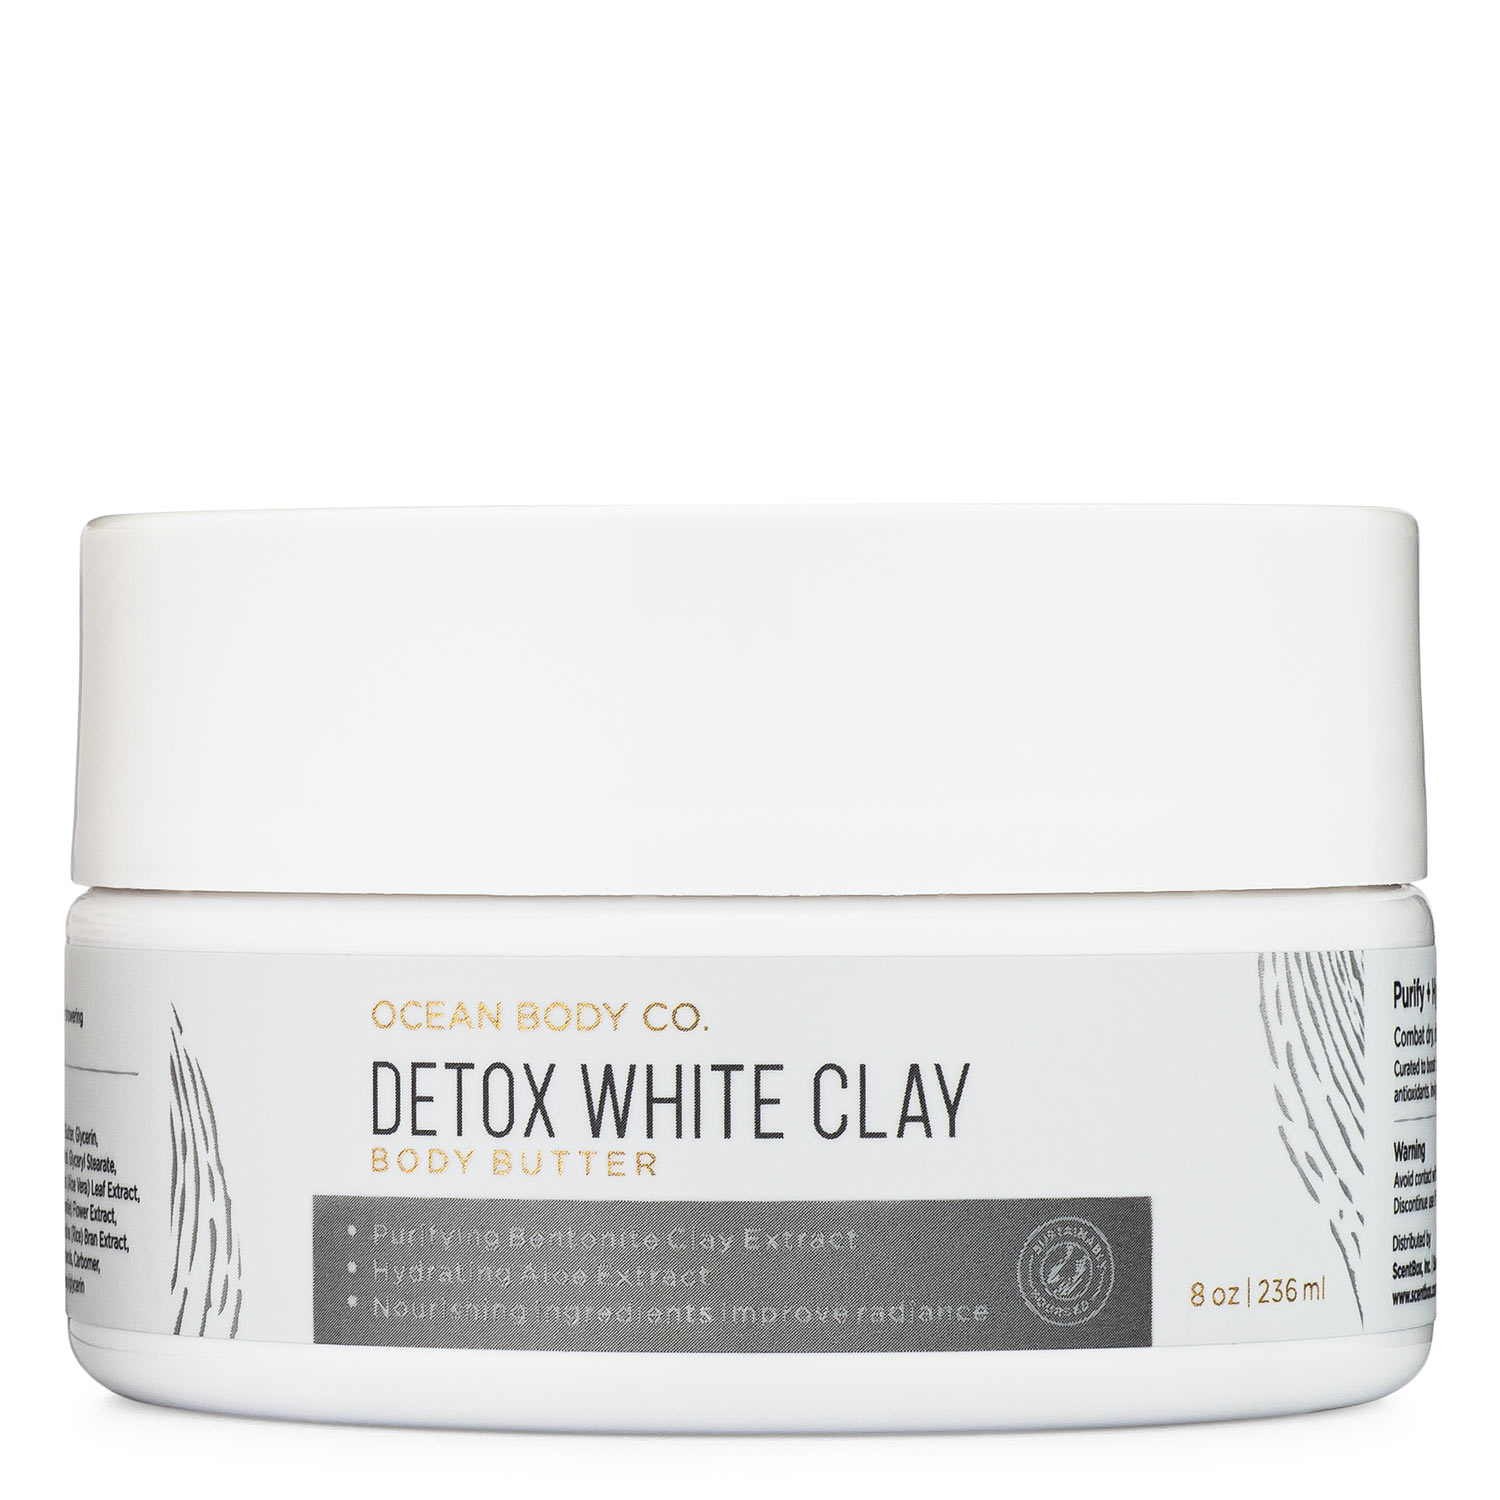 Detox White Clay Body Butter Ocean Body Co. Image